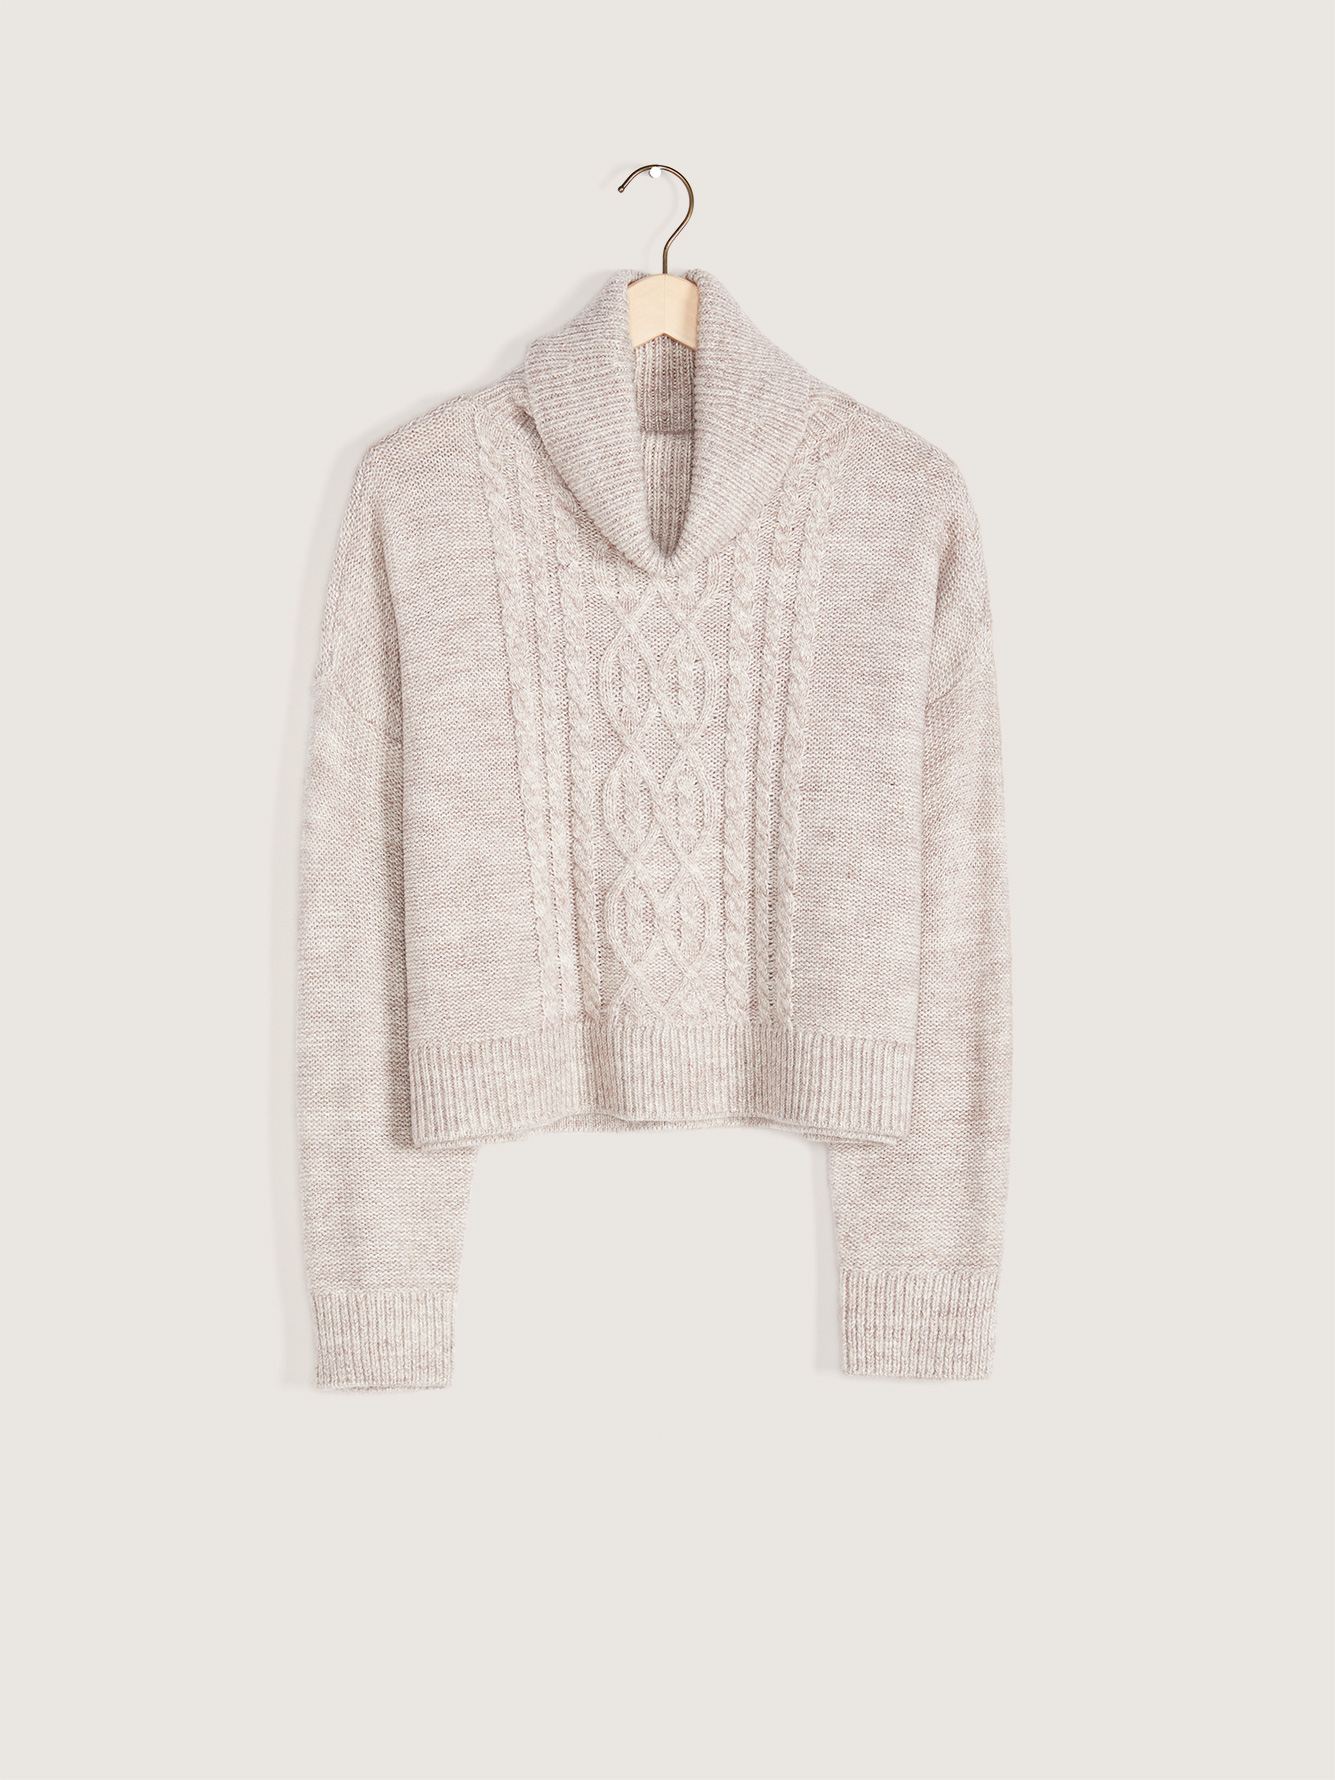 Cropped Turtleneck Sweater - Addition Elle